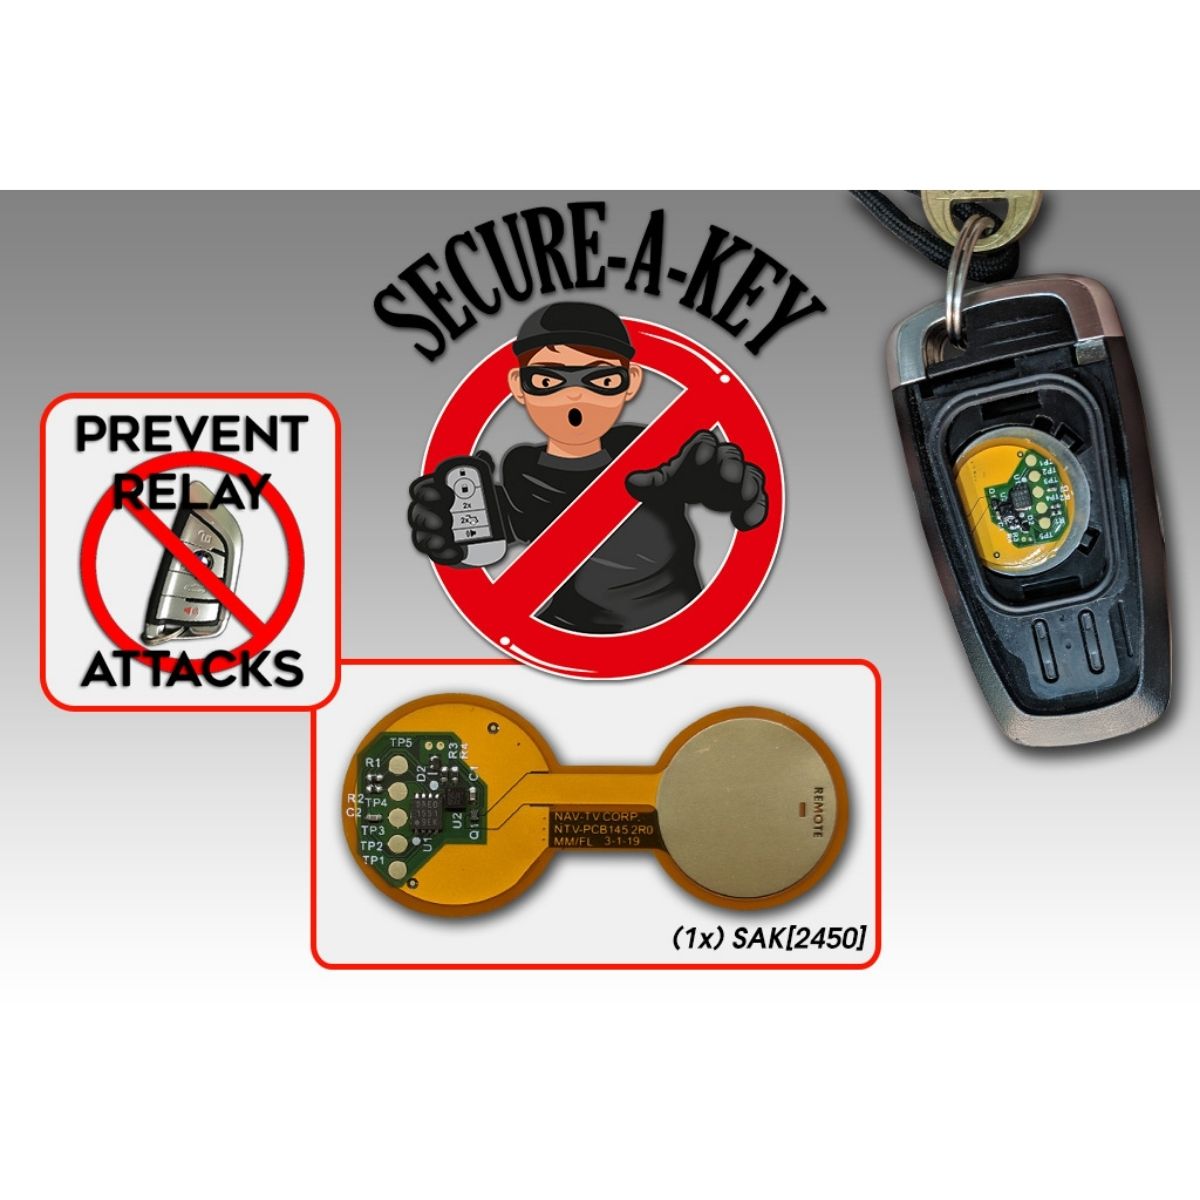 NAV-TV Kit 937 Secure-A-Key/2450 (Single)